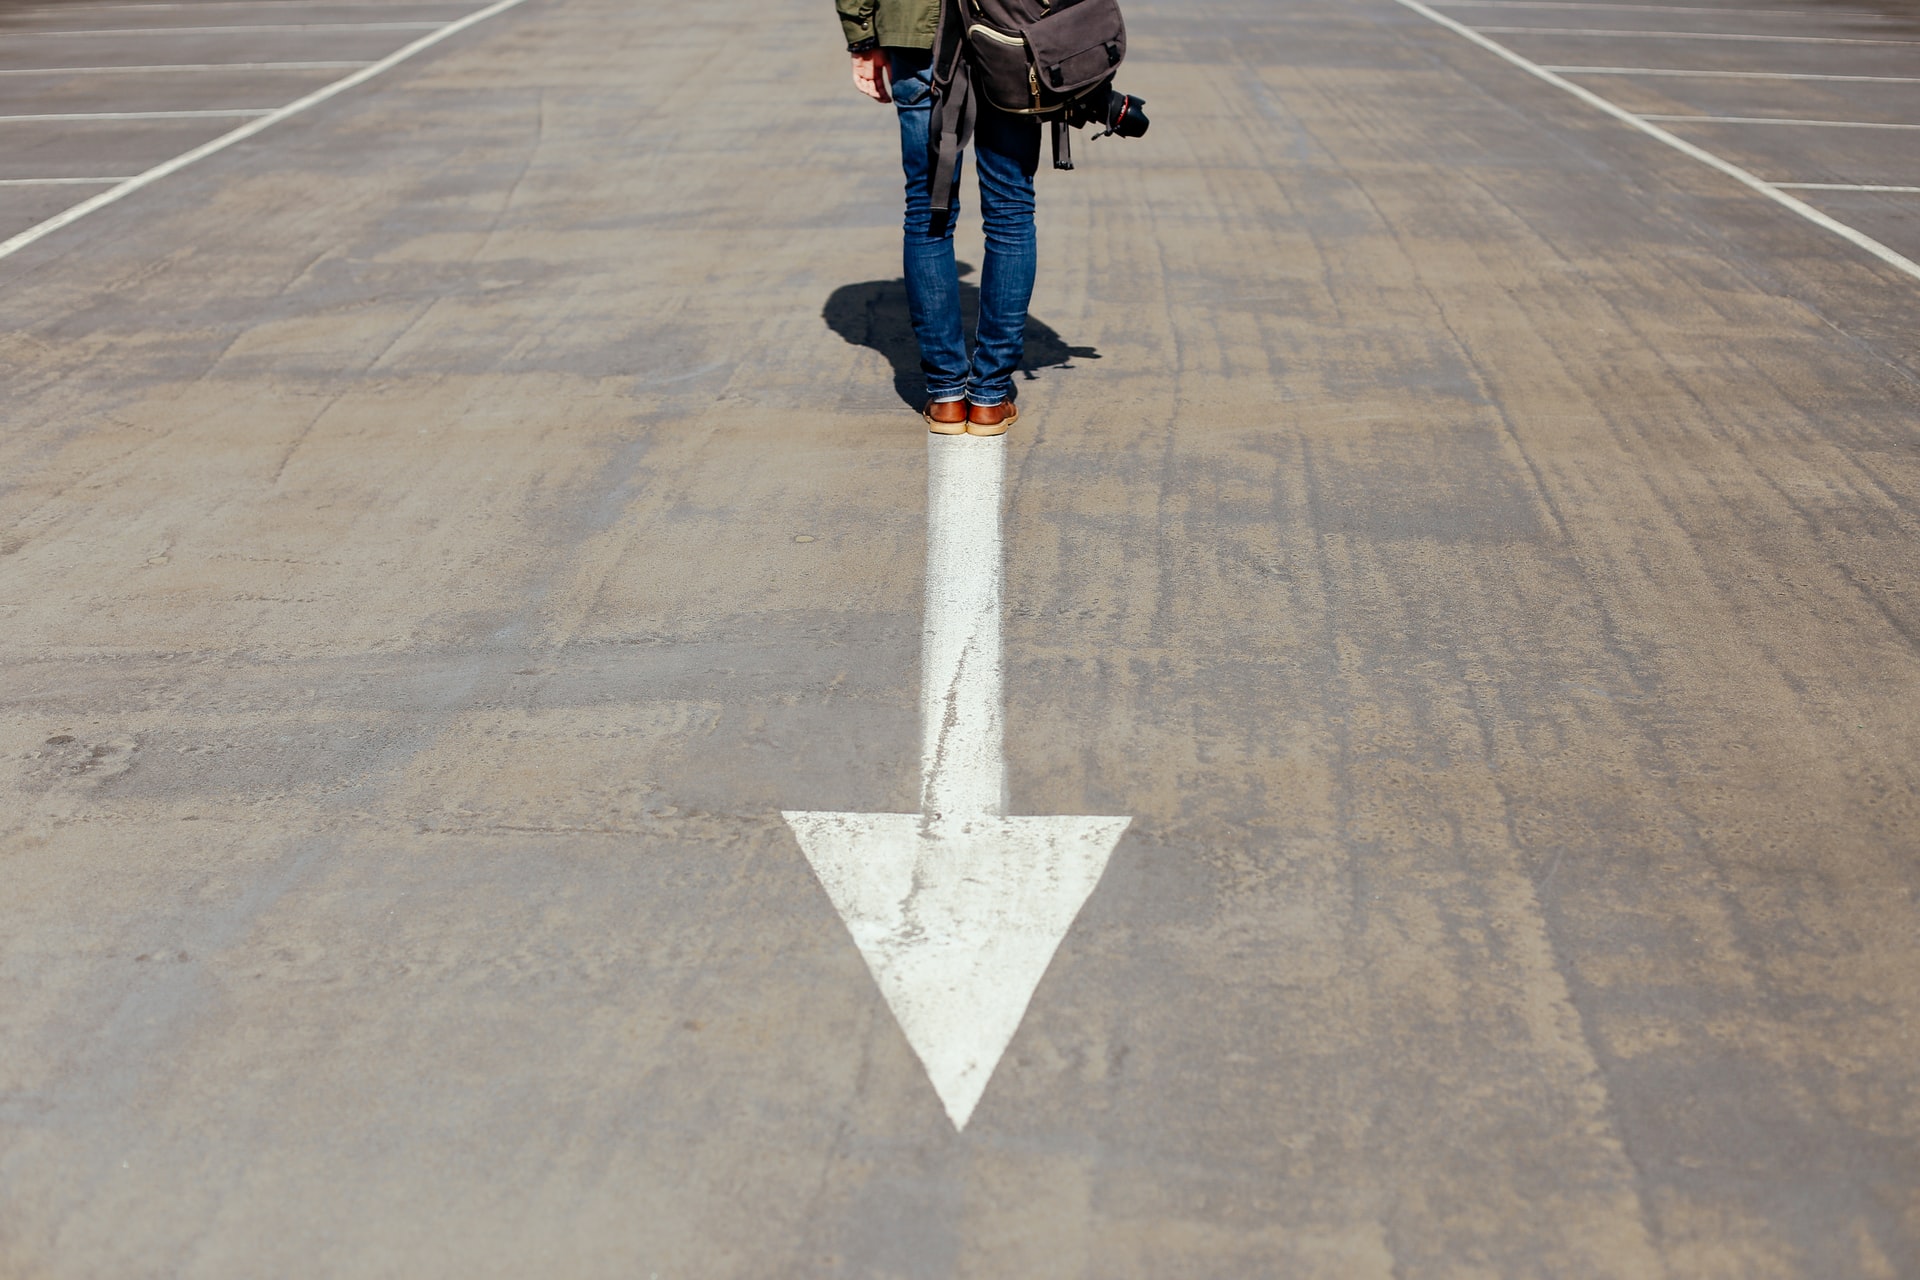 Man standing on arrow. Photo by @smartphotocourses via Unsplash